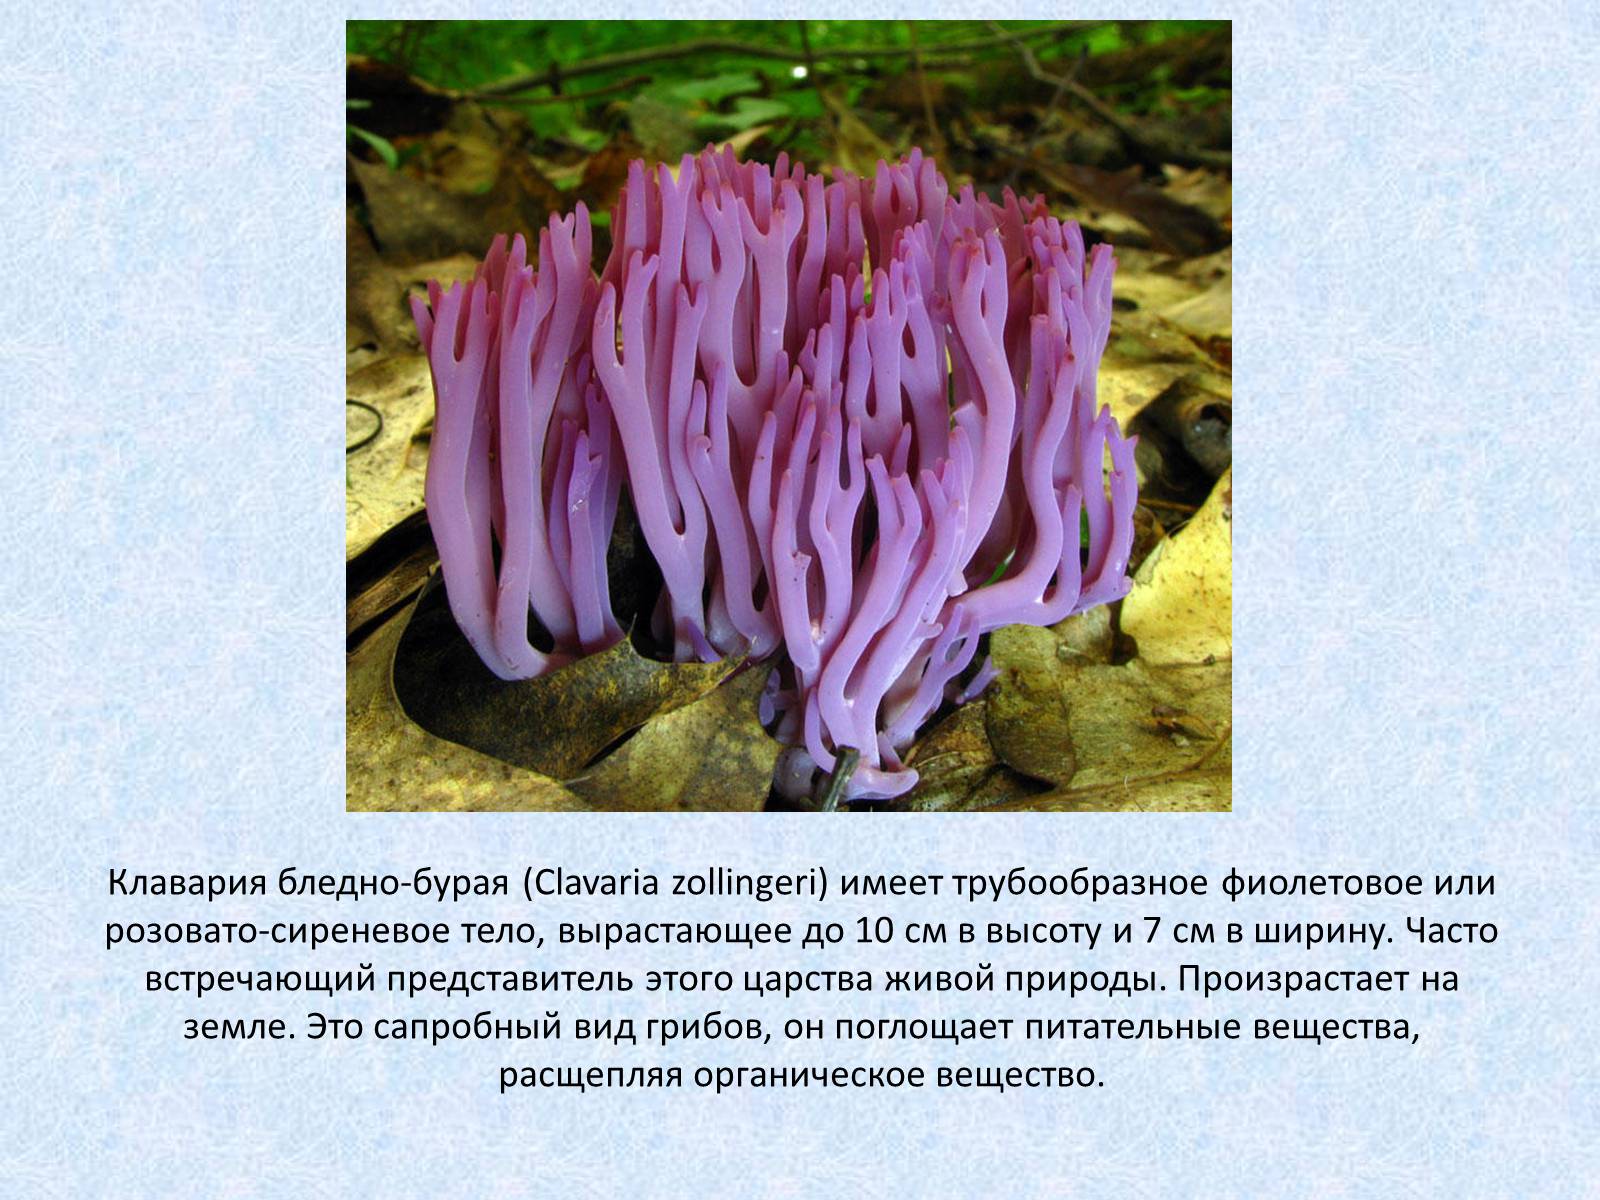 Презентація на тему «Самые красивые грибы» - Слайд #6